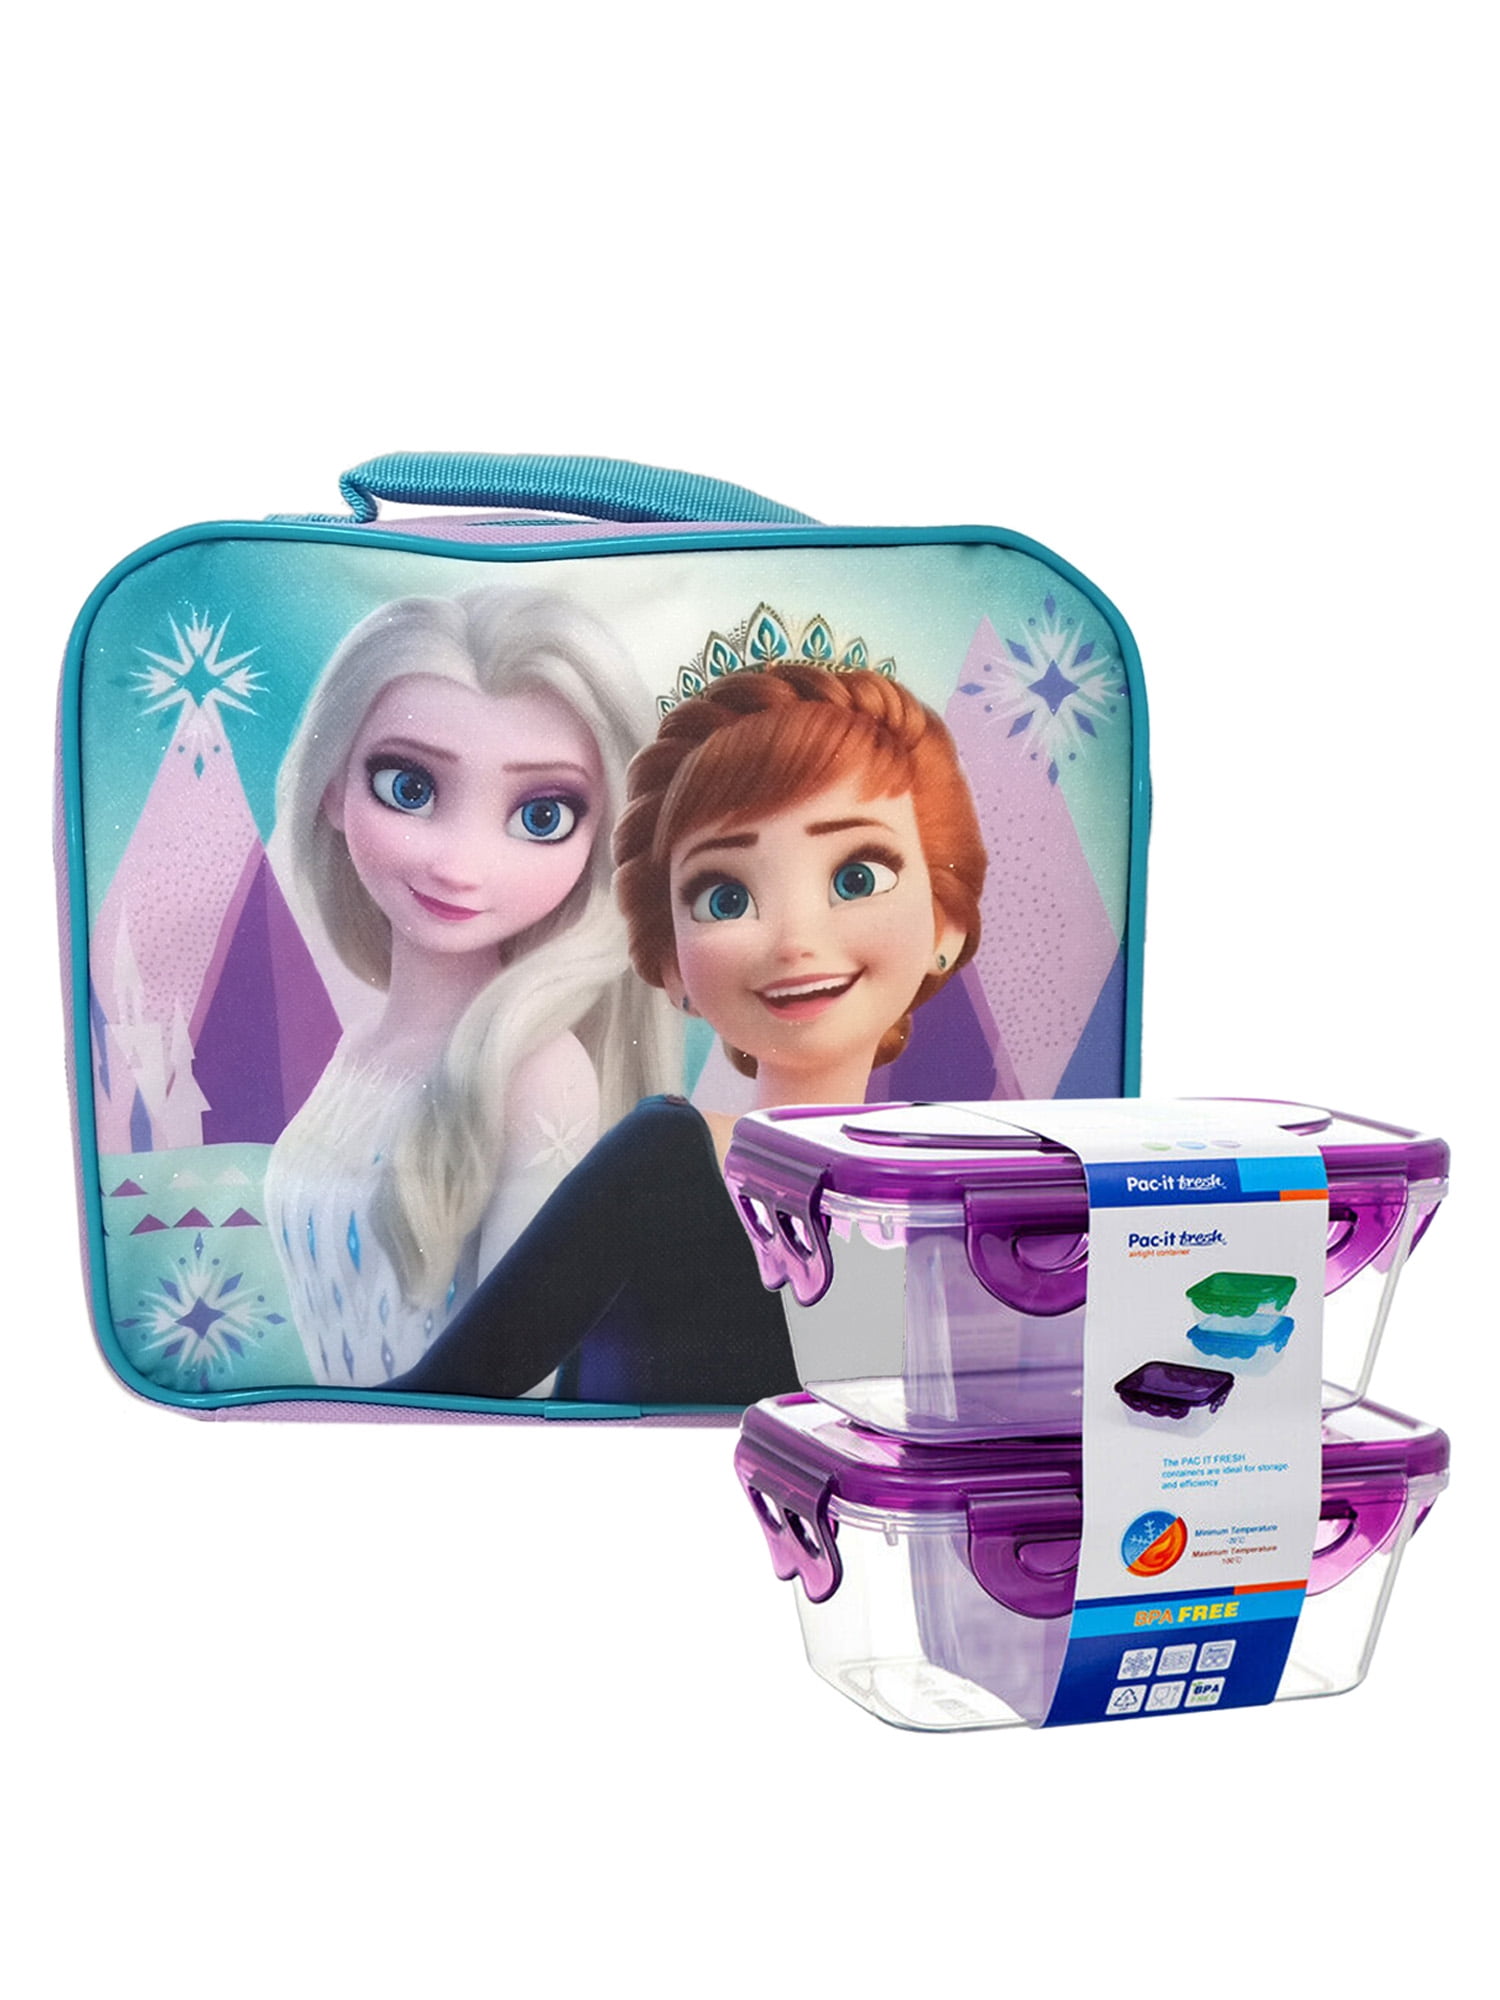 Lunch Bag - Disney - Frozen Pink Purple Anna and Elsa Kit Case New 622060